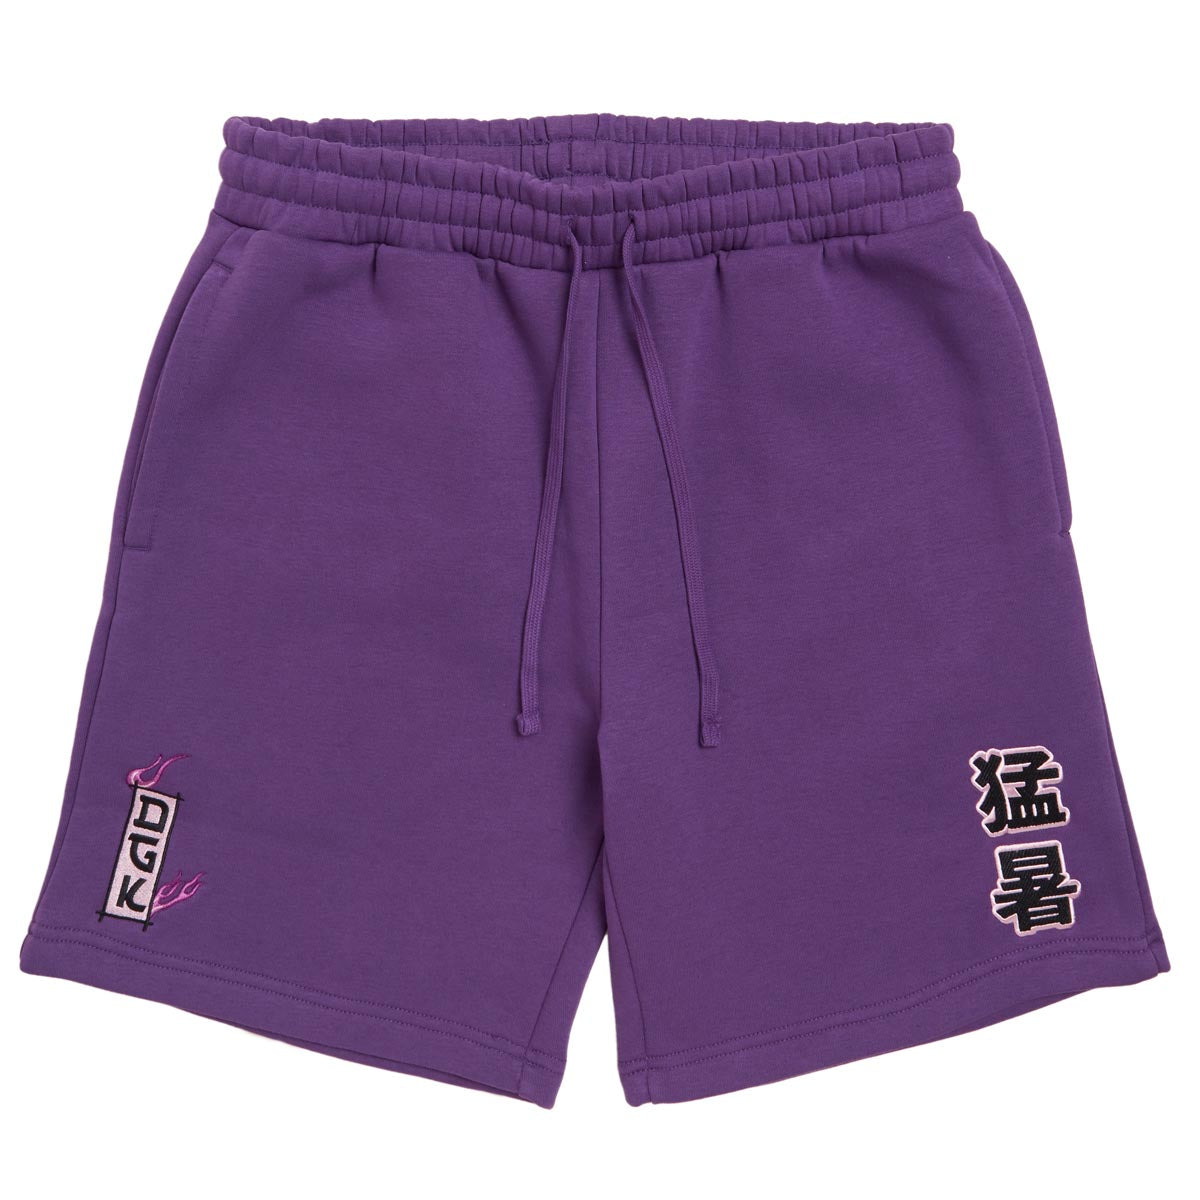 DGK Fire Blossom Fleece Shorts - Purple image 1